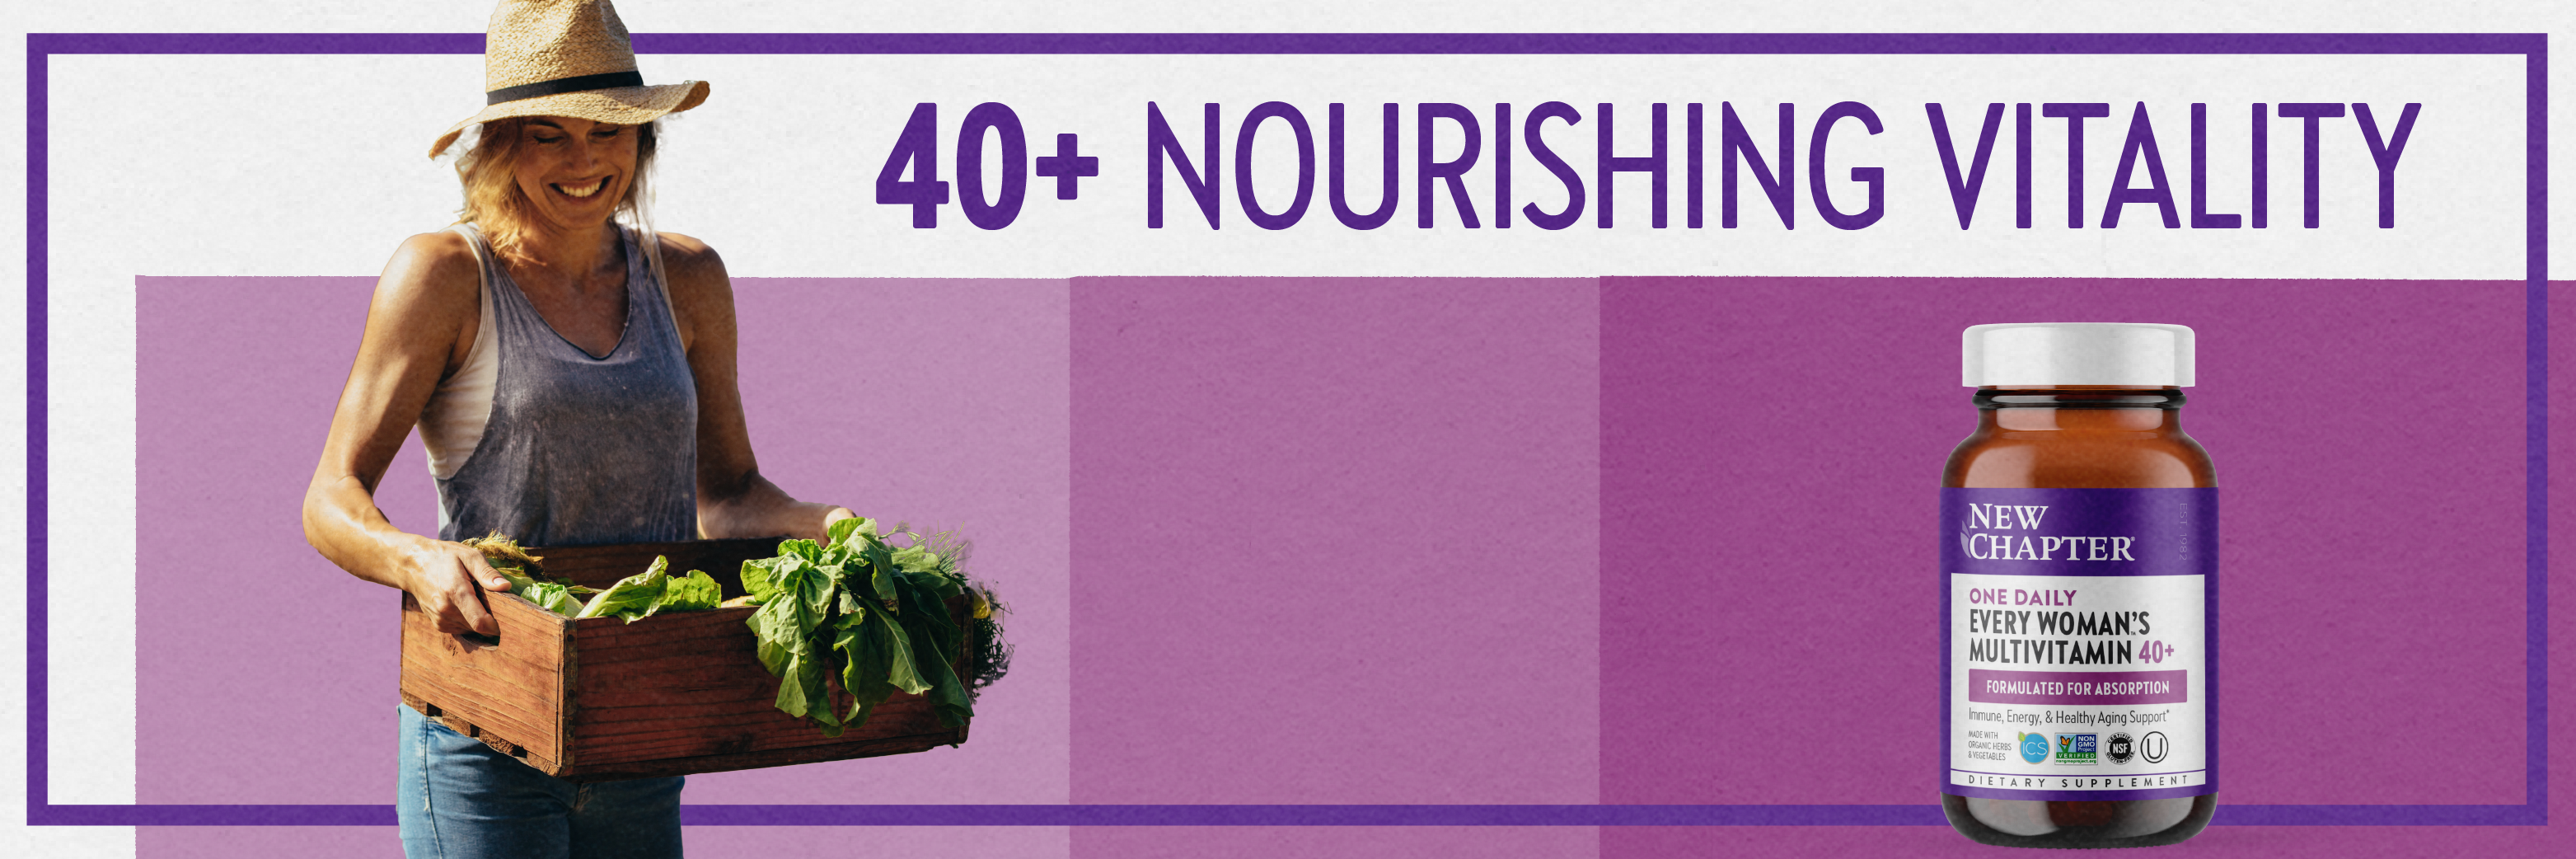 40+ Nourishing vitality